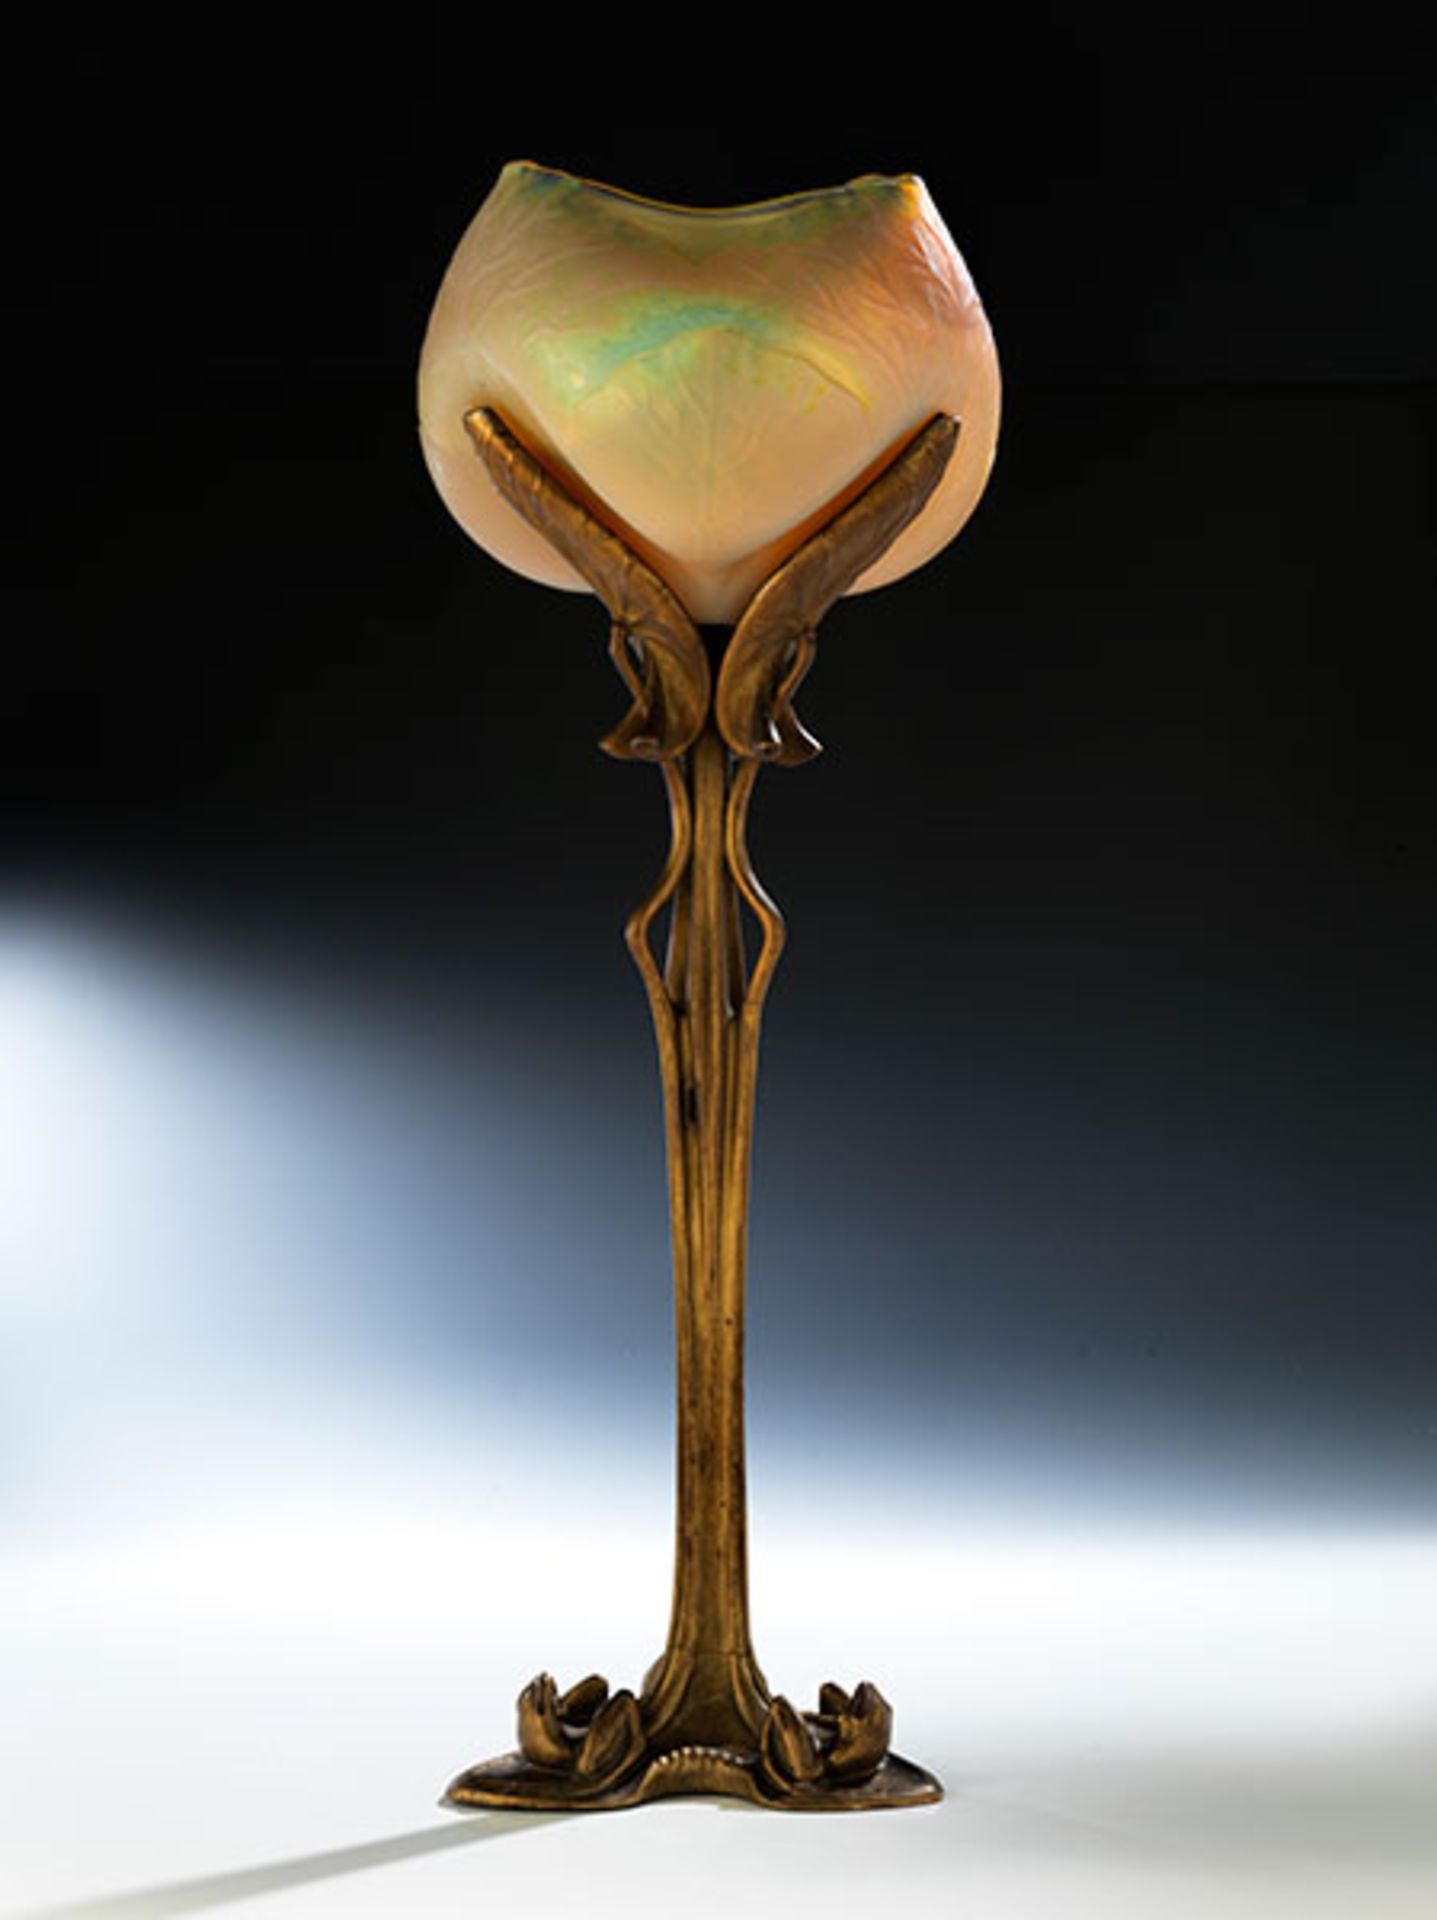 Extrem seltene Nénuphar Tischlampe Höhe: 74 cm. Fuß signiert "L. Majorelle Nancy", Lampenschirm